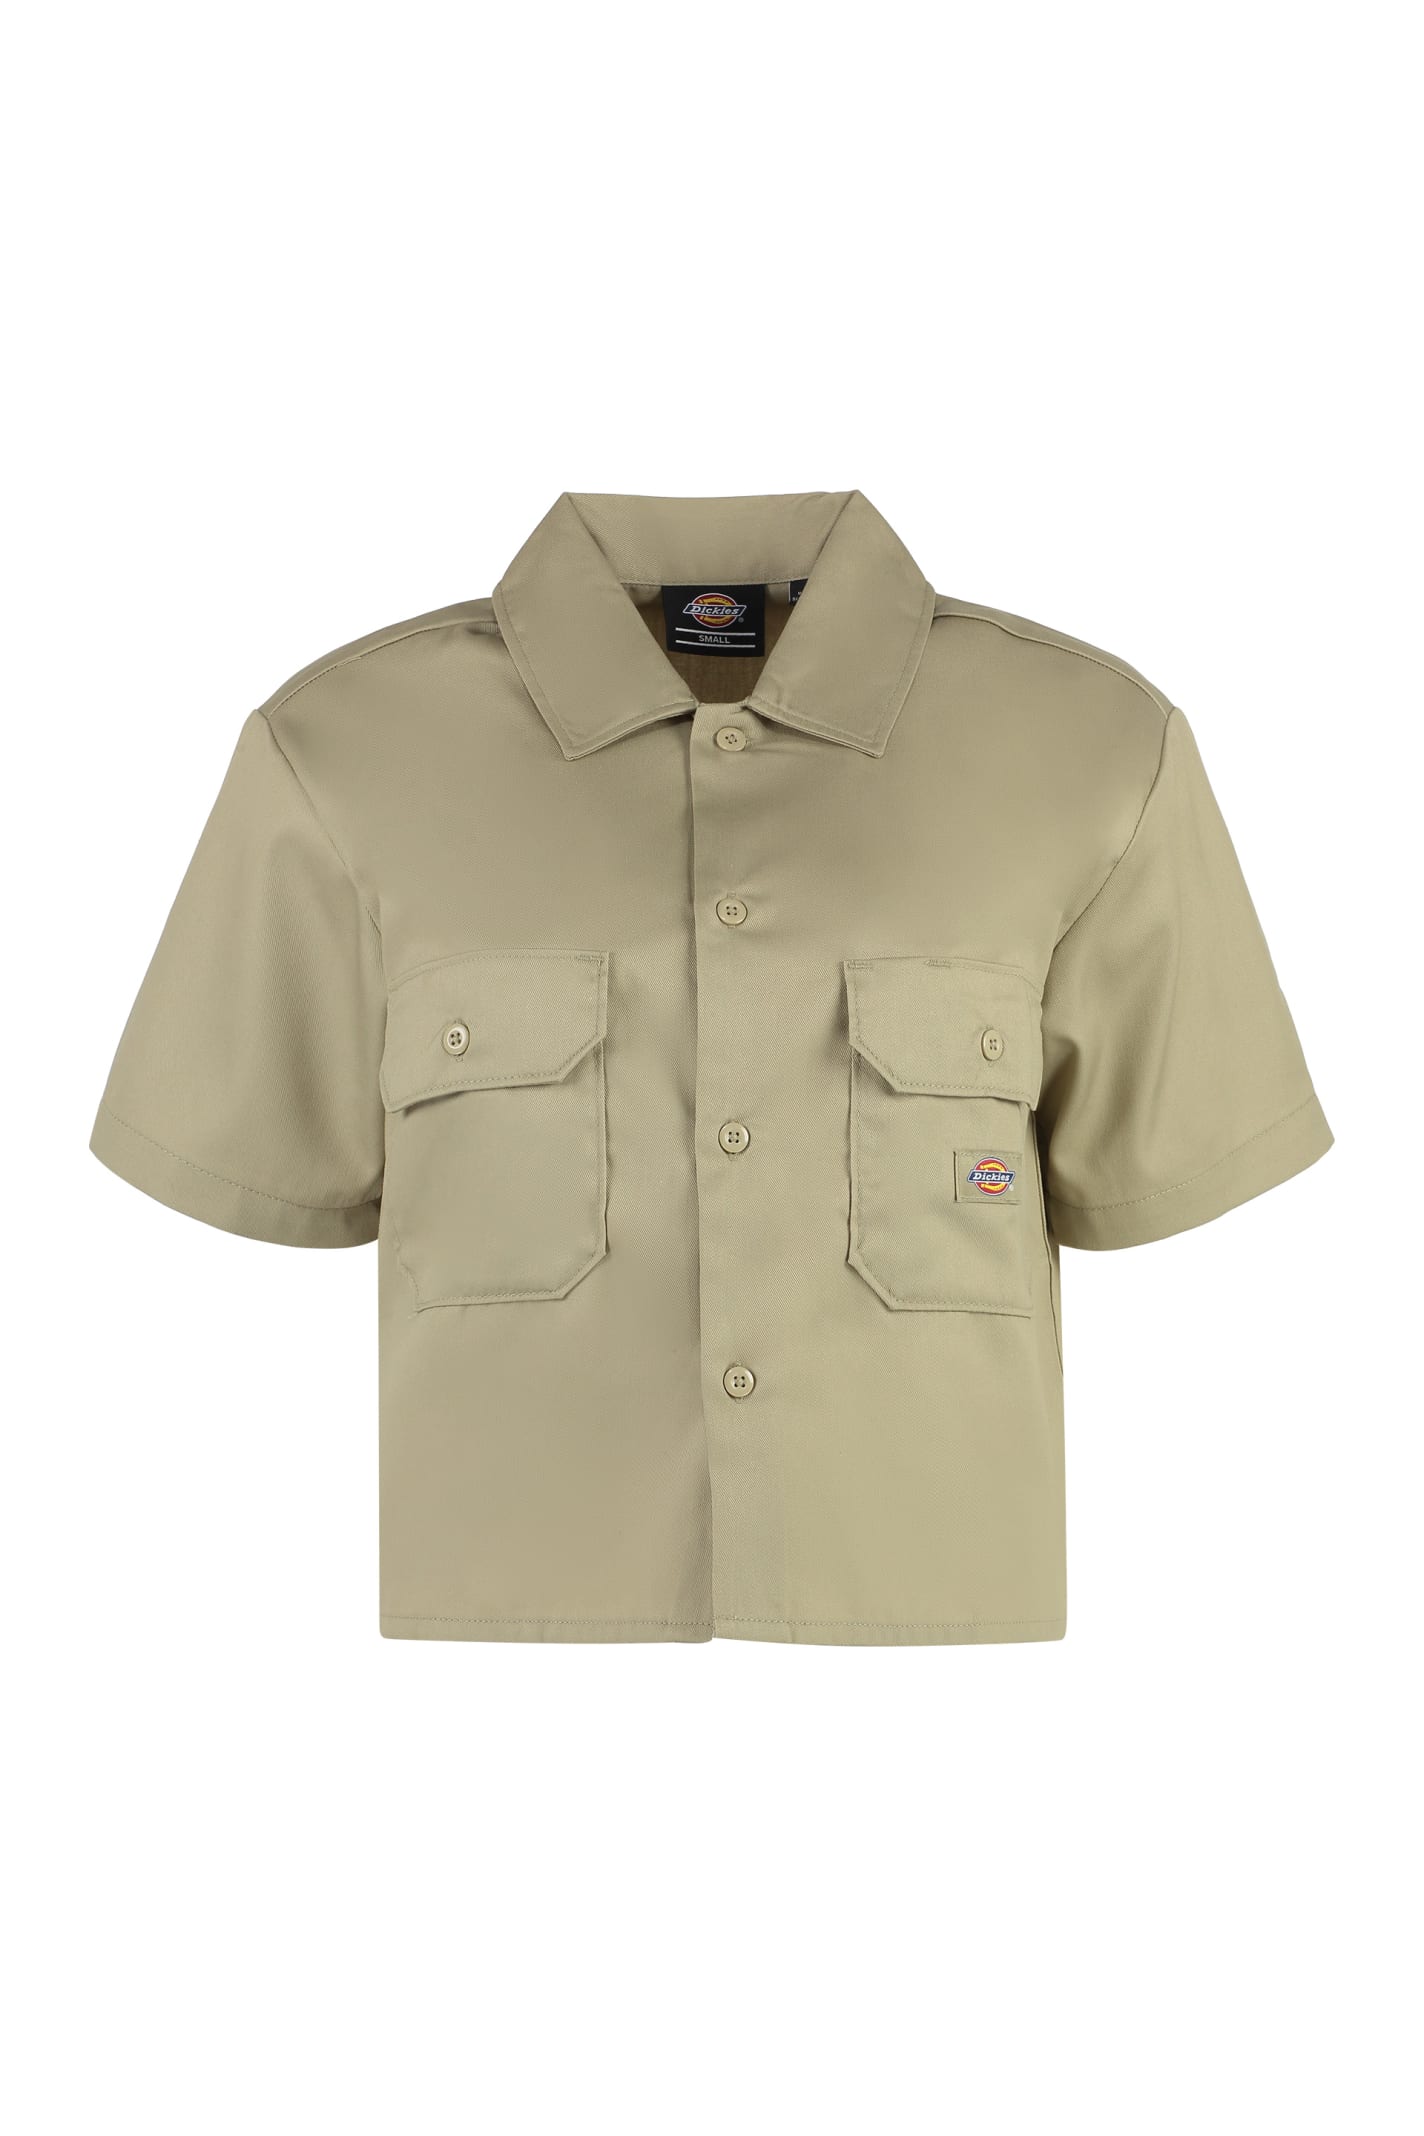 Dickies Short Sleeve Cotton Shirt In Khaki